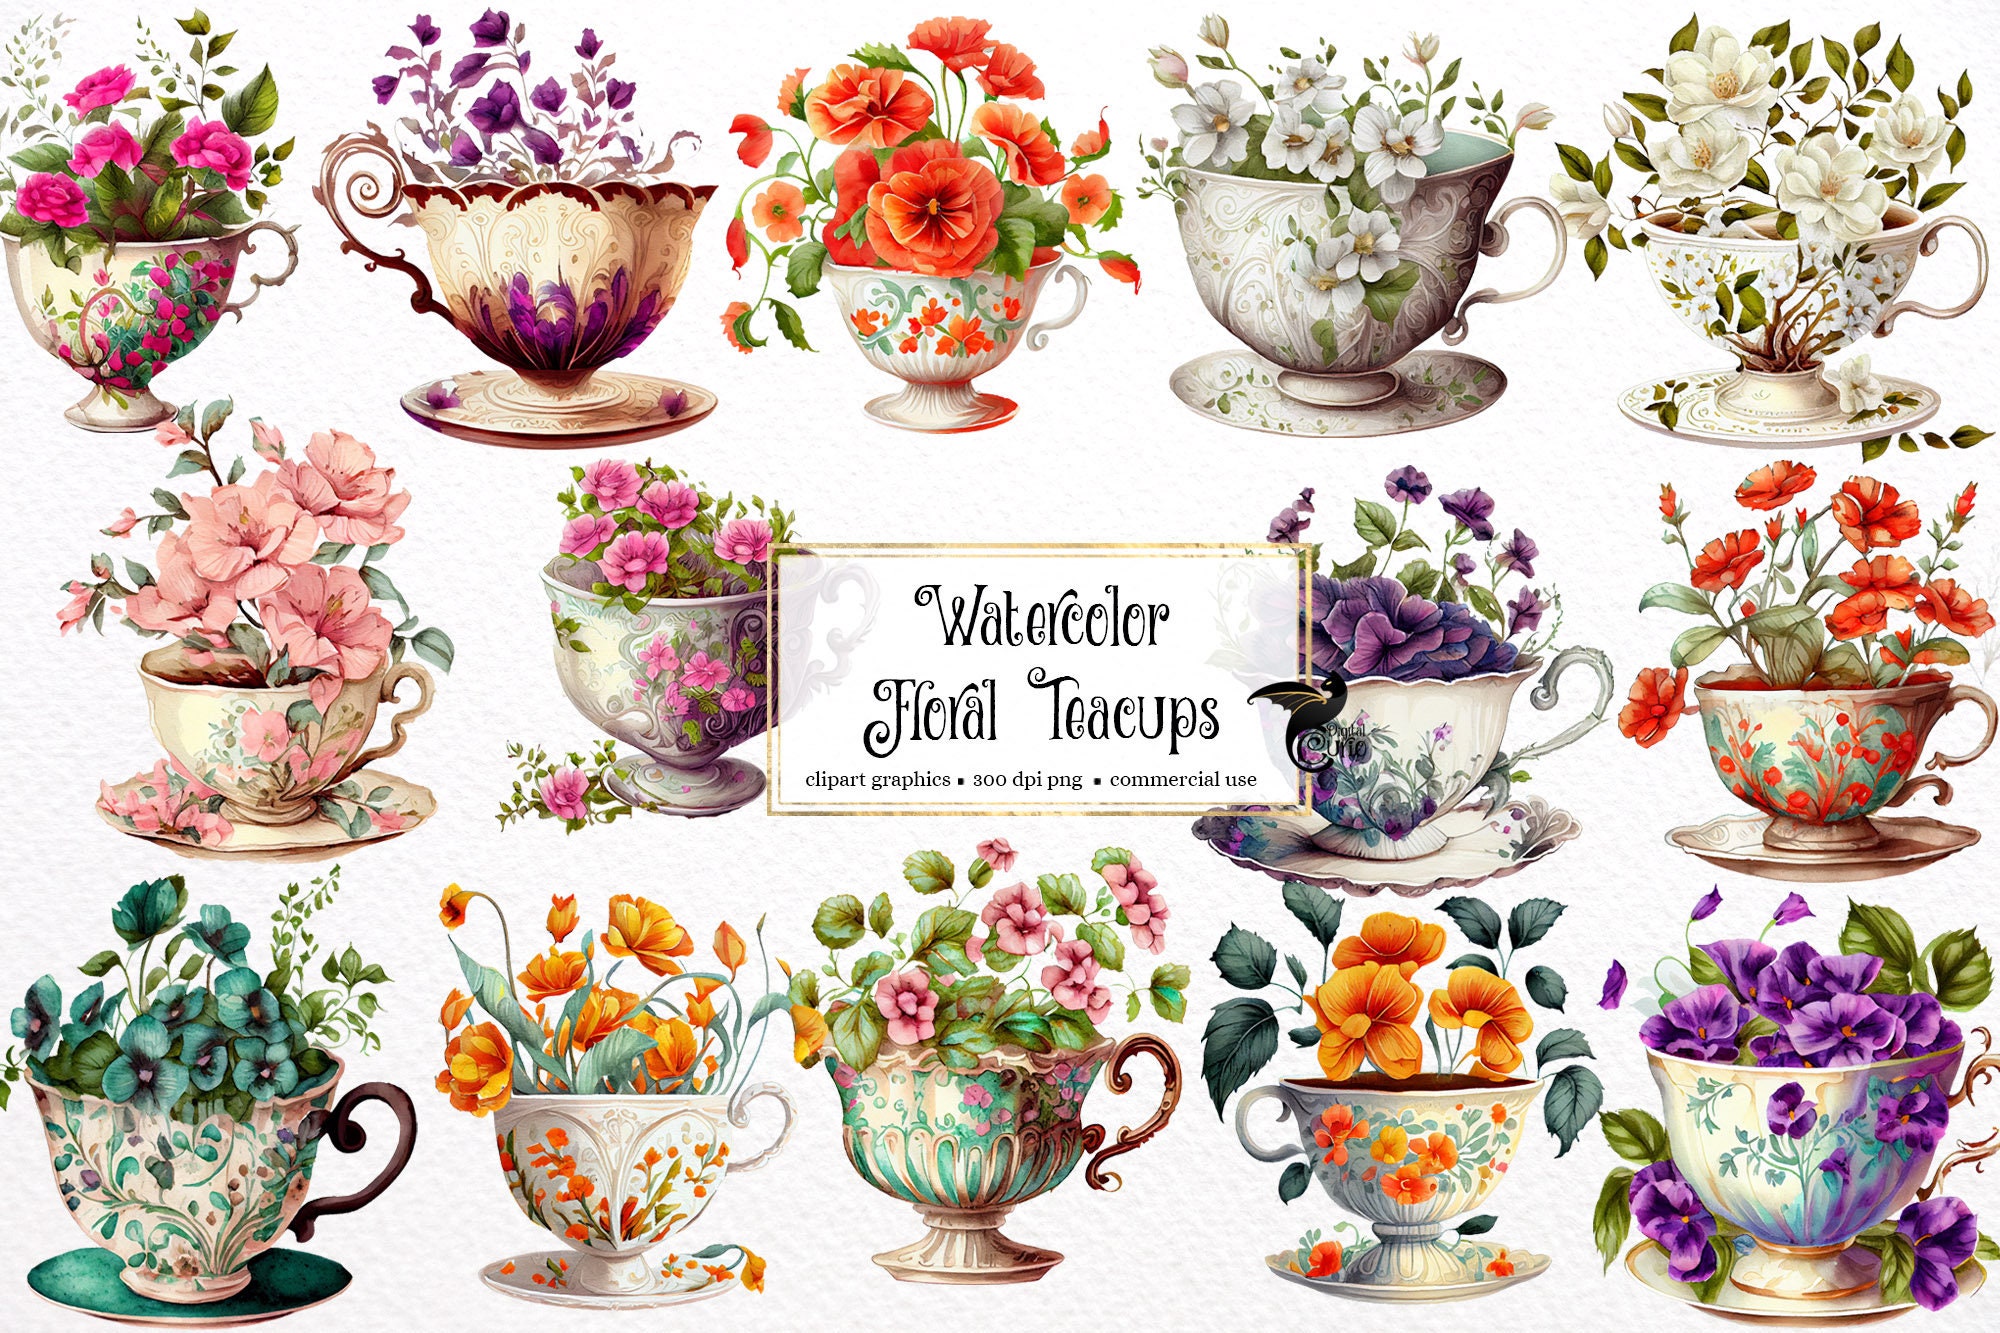 Teacup Clipart Tea Clipart Teacup Floral Vintage Tea Cups Tea Party Clipart  Tea Cups Clipart Teapots Digital Collage Sheet Fussy Cut,cricut 